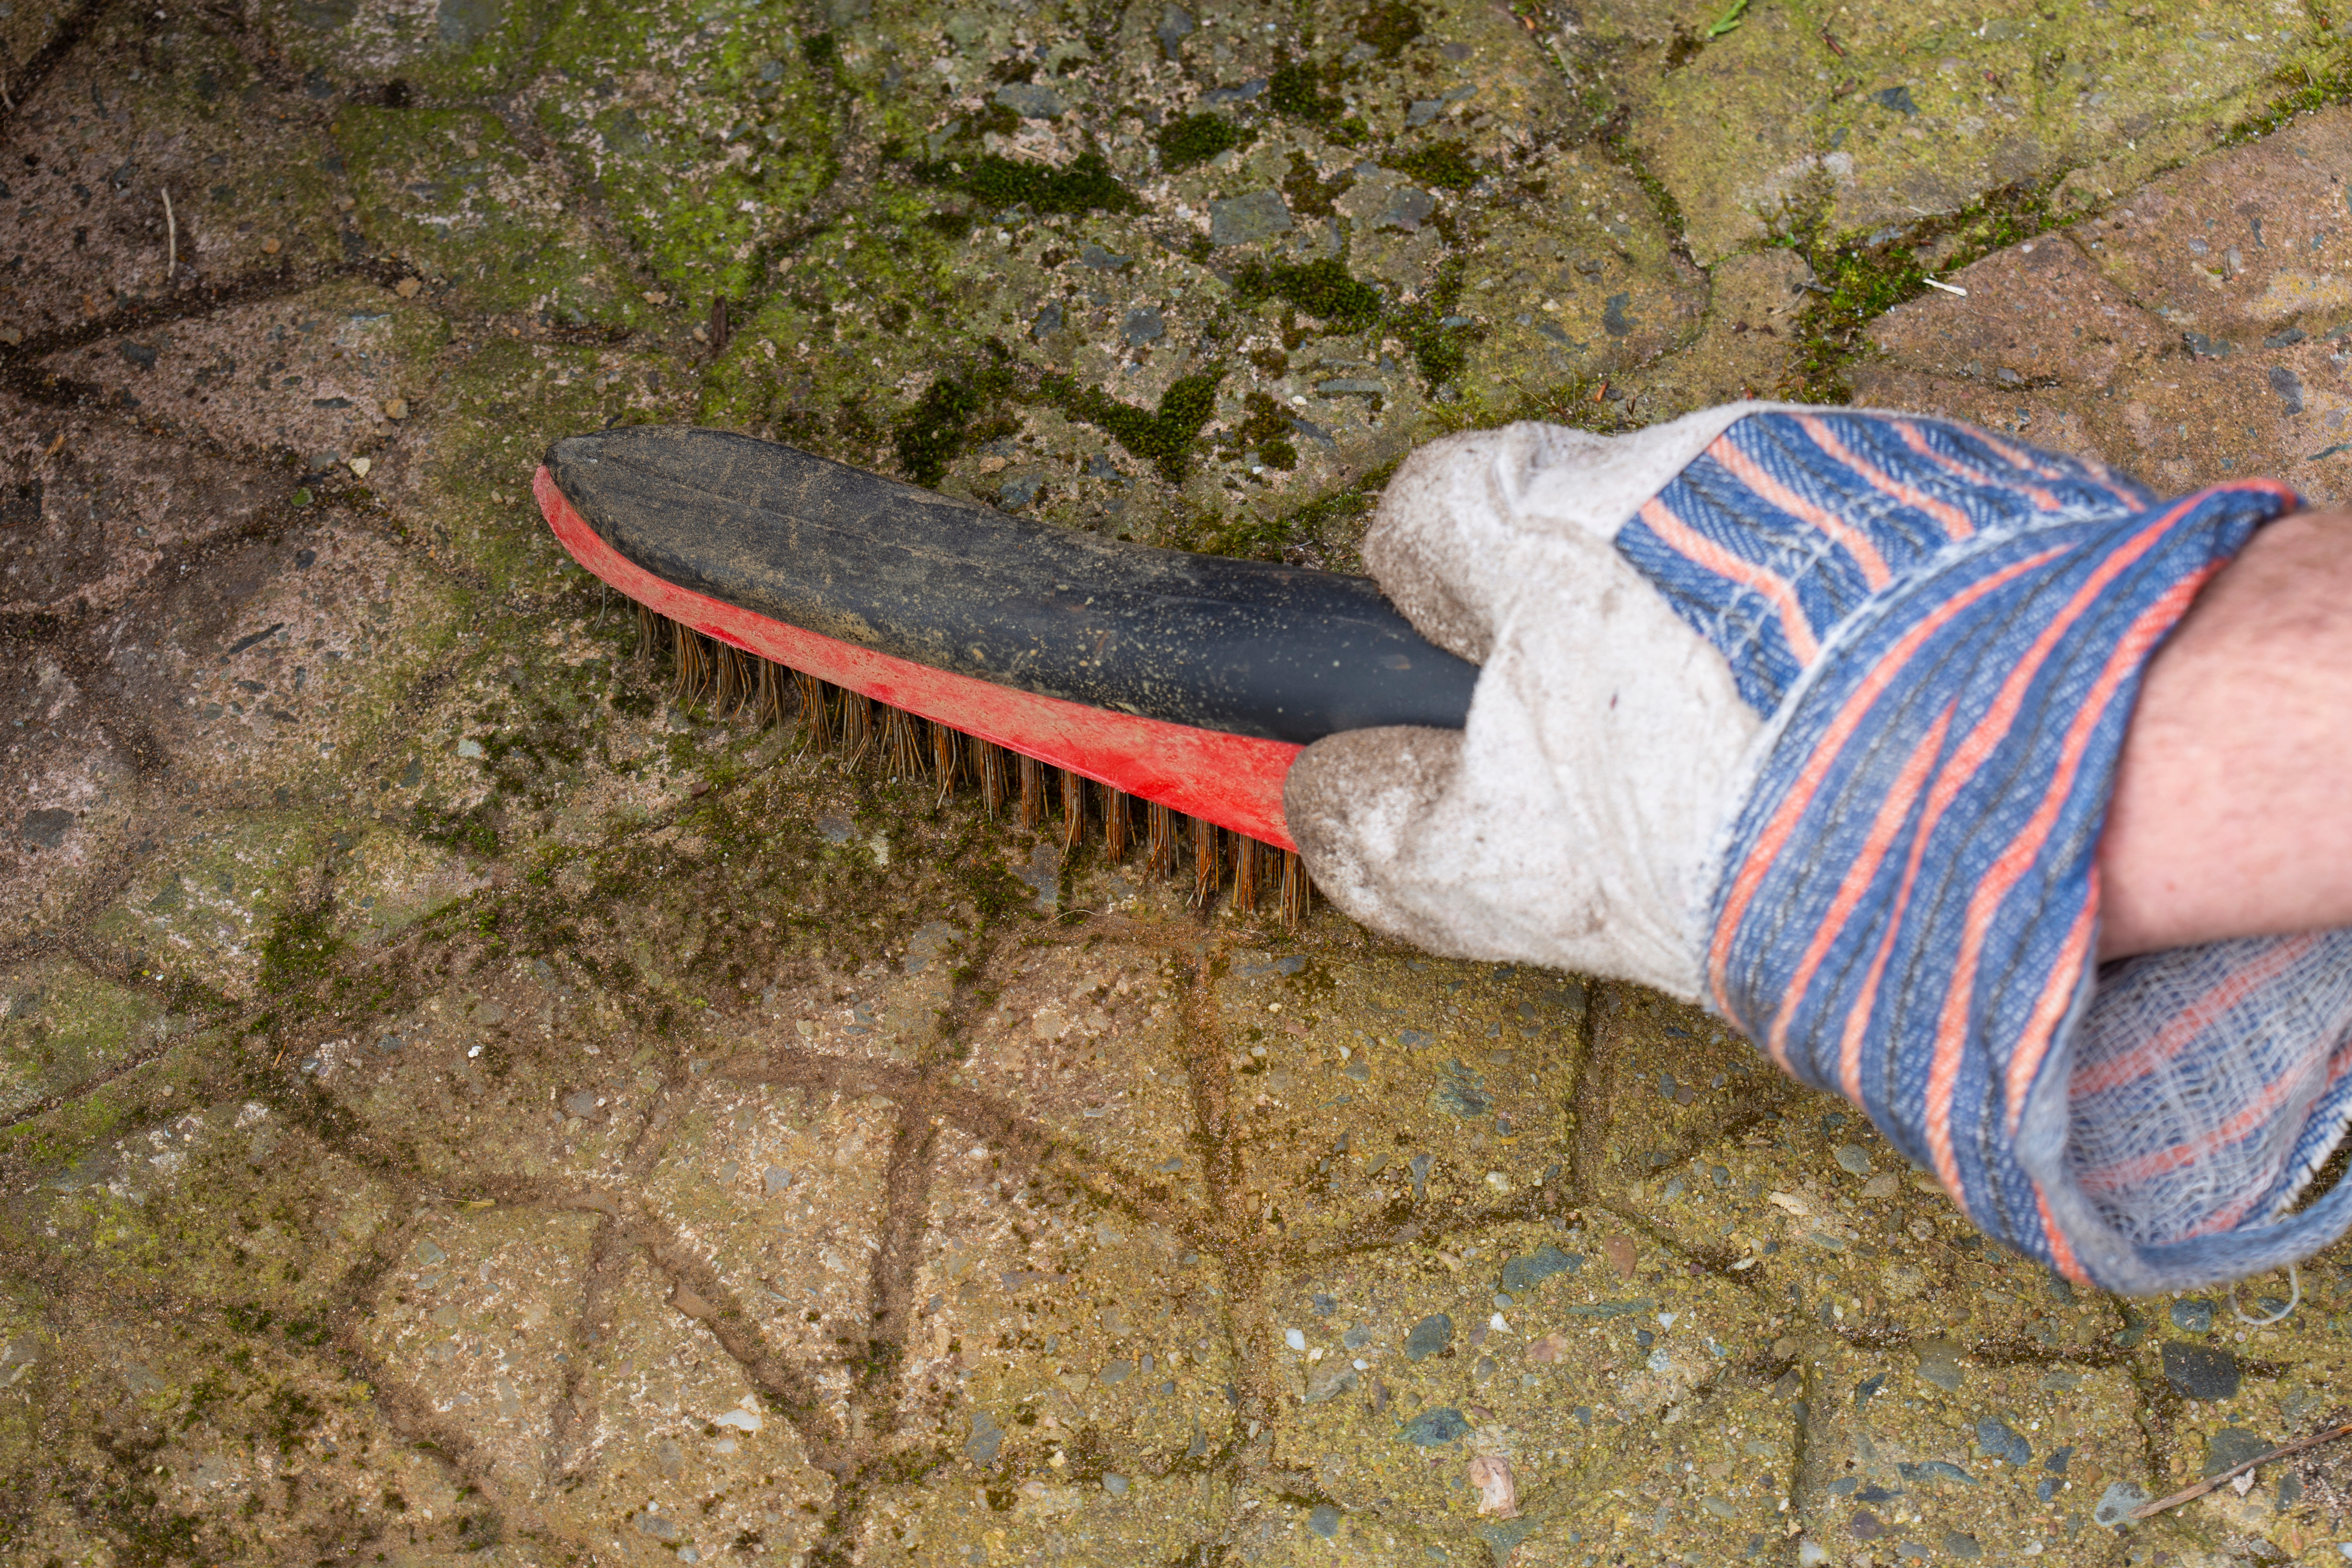 A gardener using a wire brush to scrape away moss | Source: Shutterstock